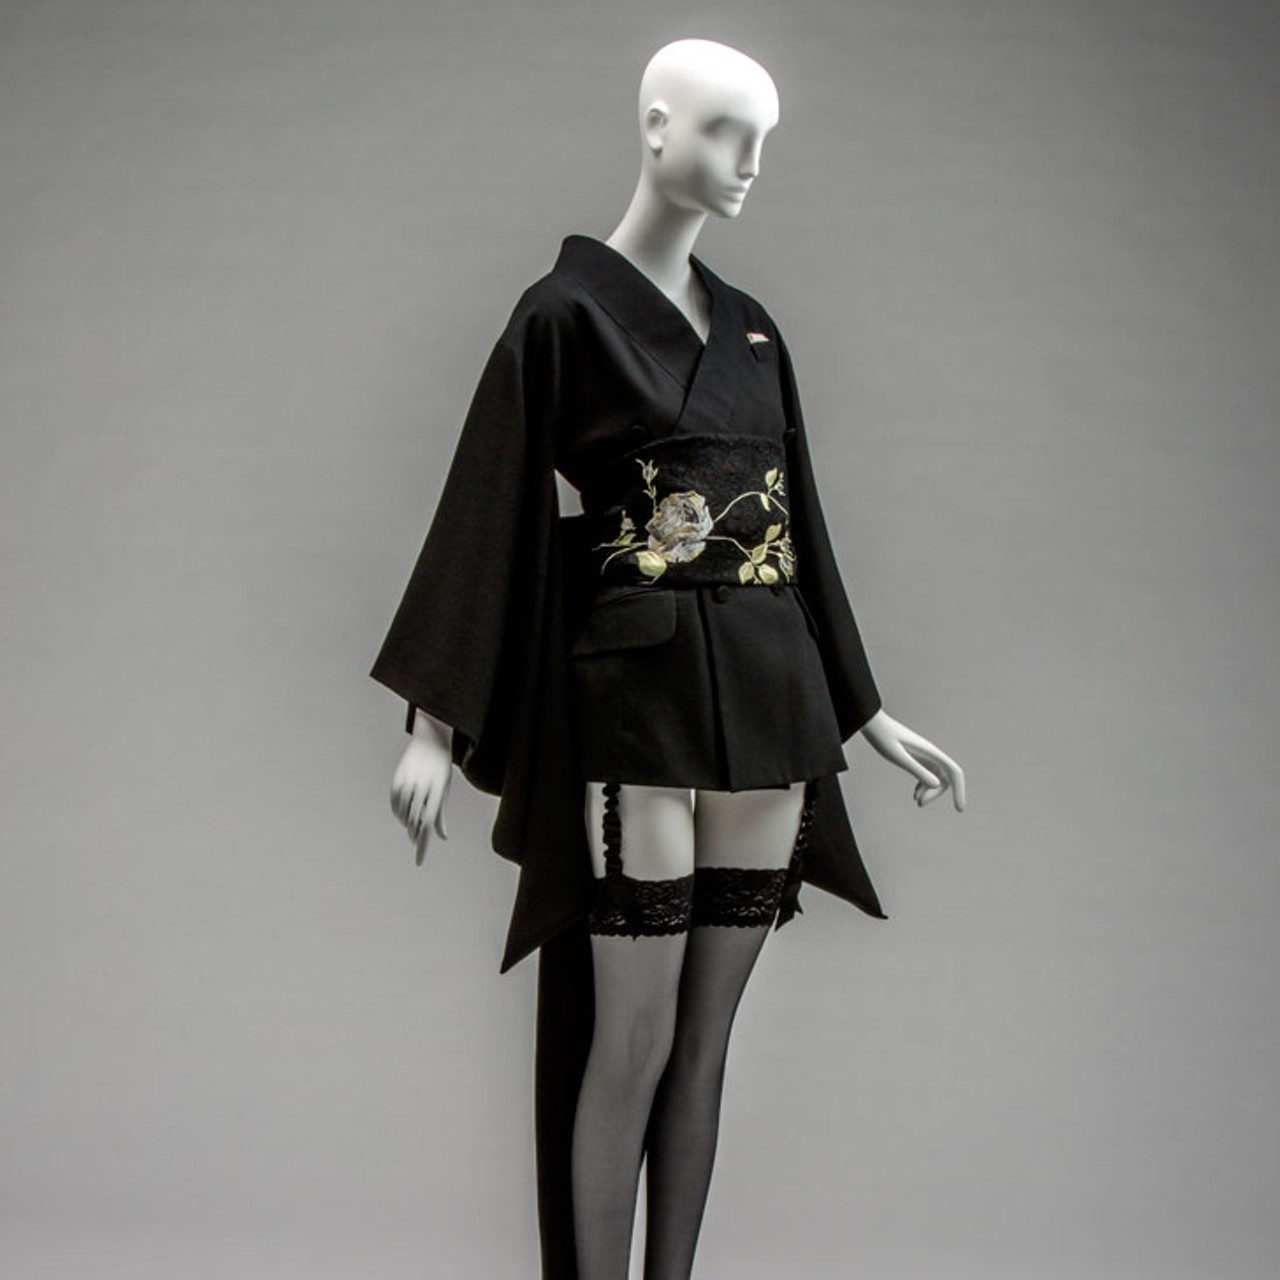 John Galliano, Autumn/Winter 1994
The Kyoto Costume Institute
Photo by Takashi Hatakeyama